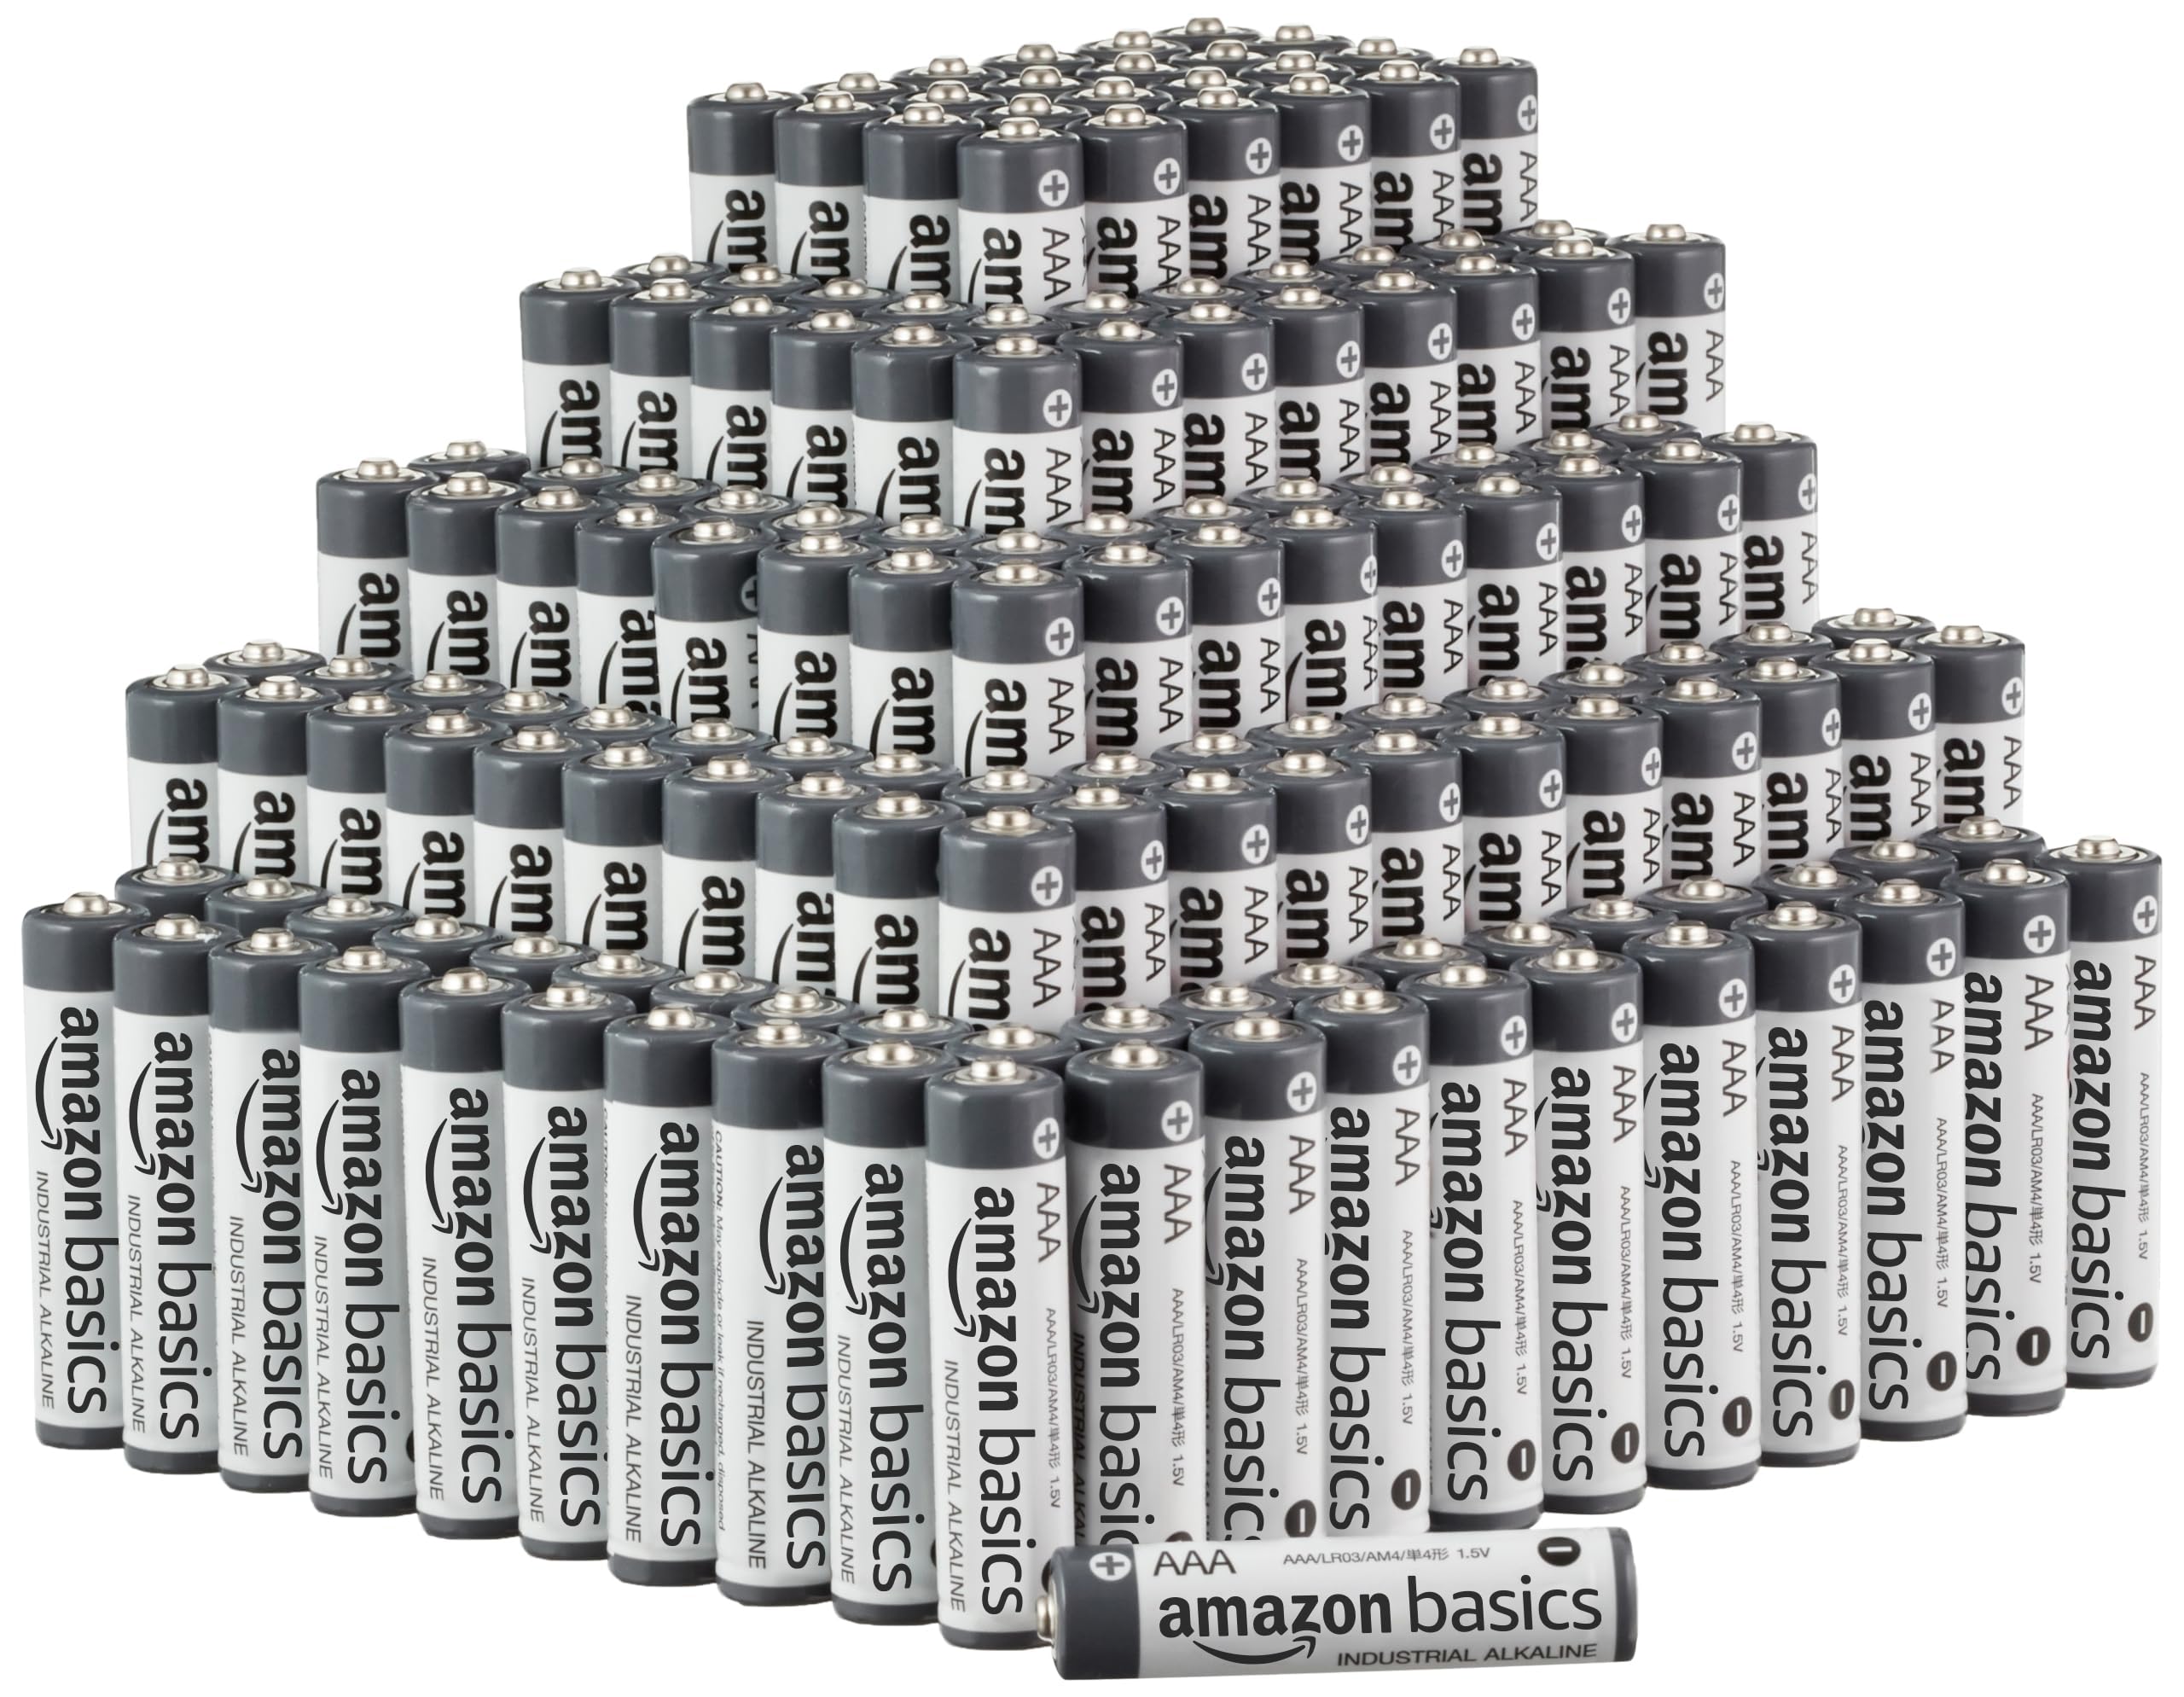 boutique en ligne Amazon Basics Lot de 250 piles Alkaline AAA industrielles n7hgjVbvo en France Online